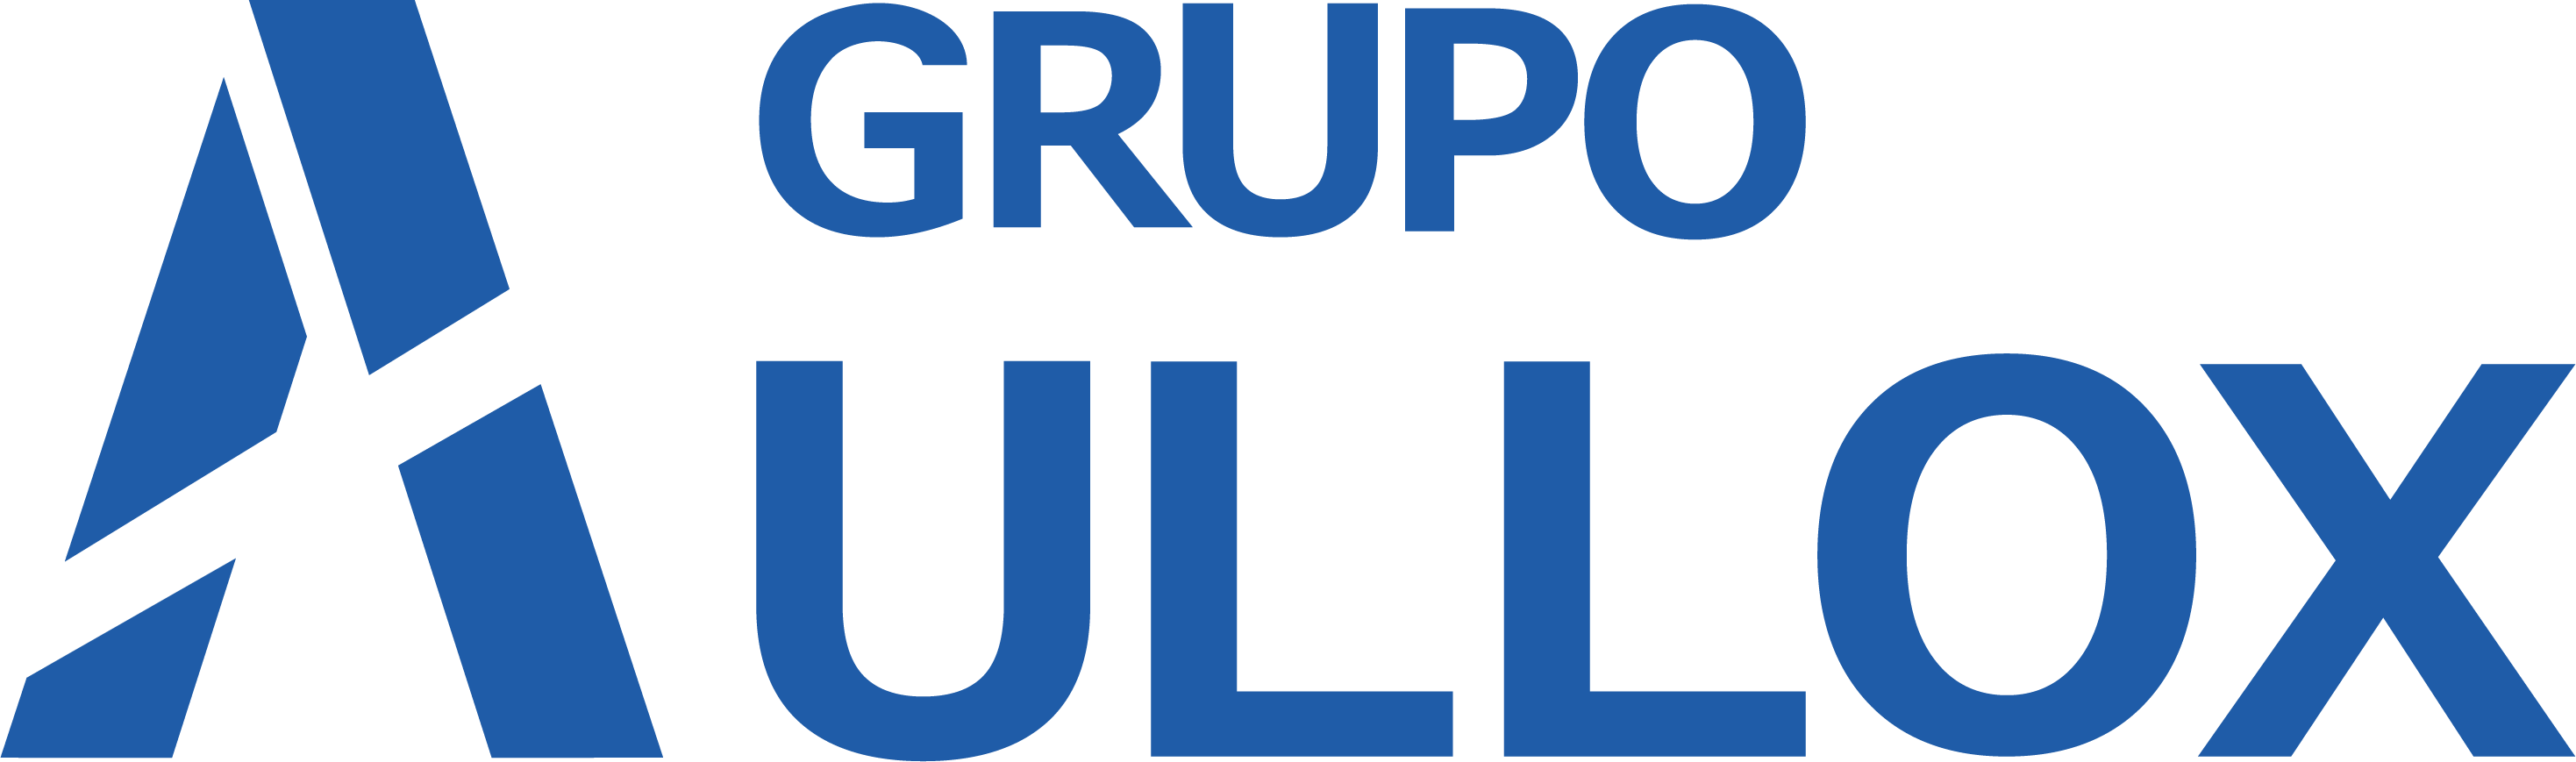 Grupo Aullox